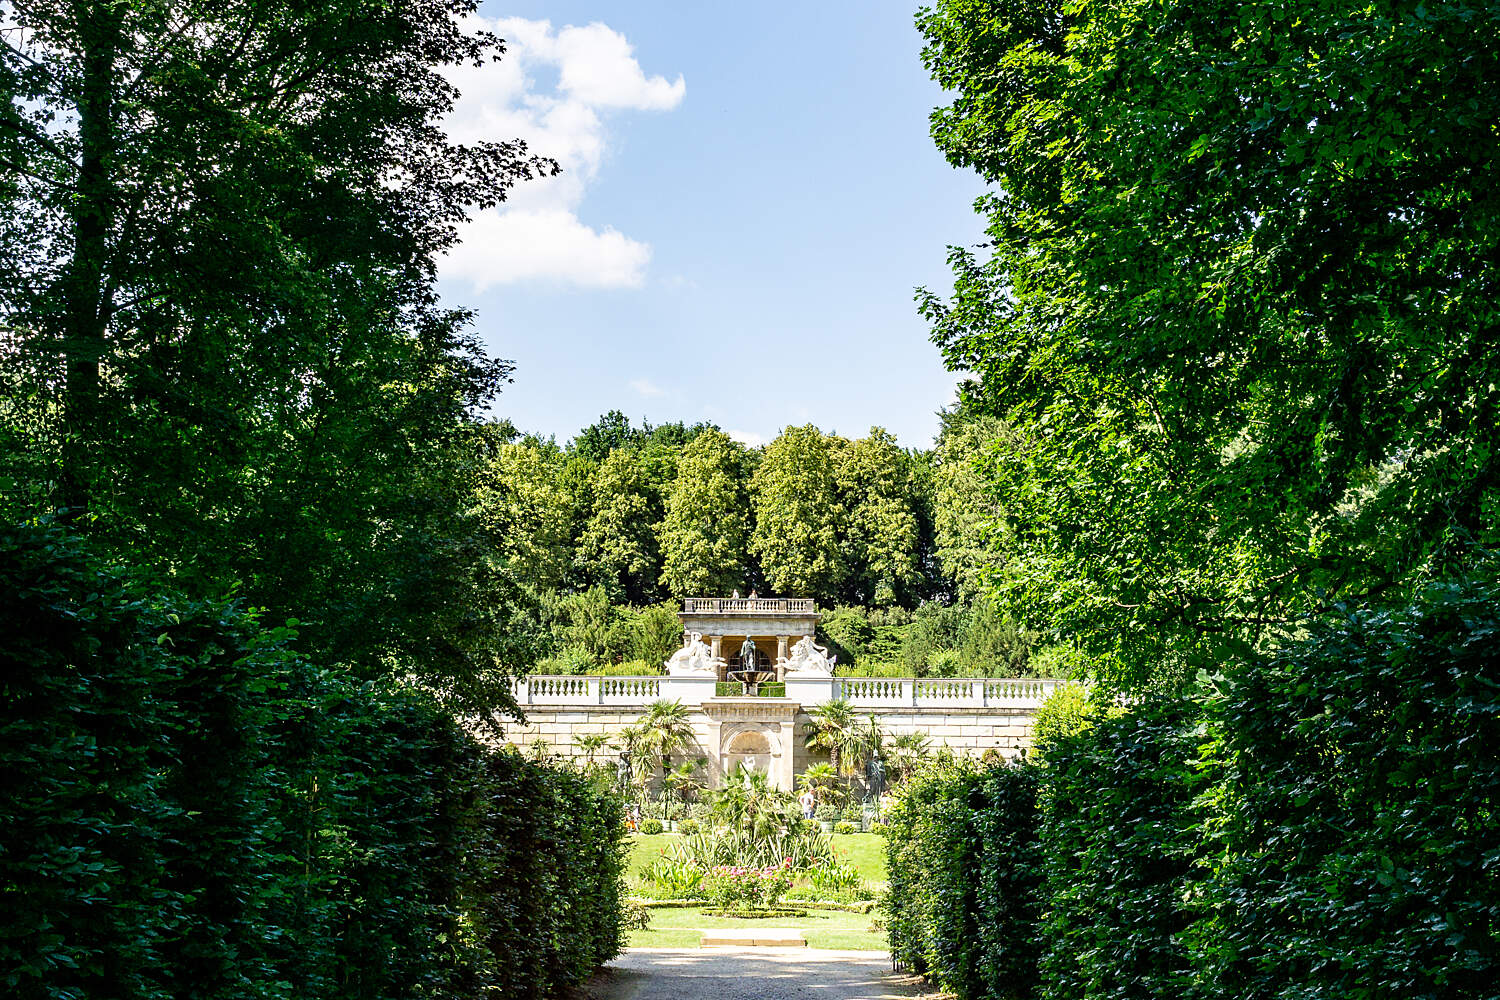 Neuer Garten Potsdam Best Of Sicilian Garden – Potsdam – tourist attractions Tropter